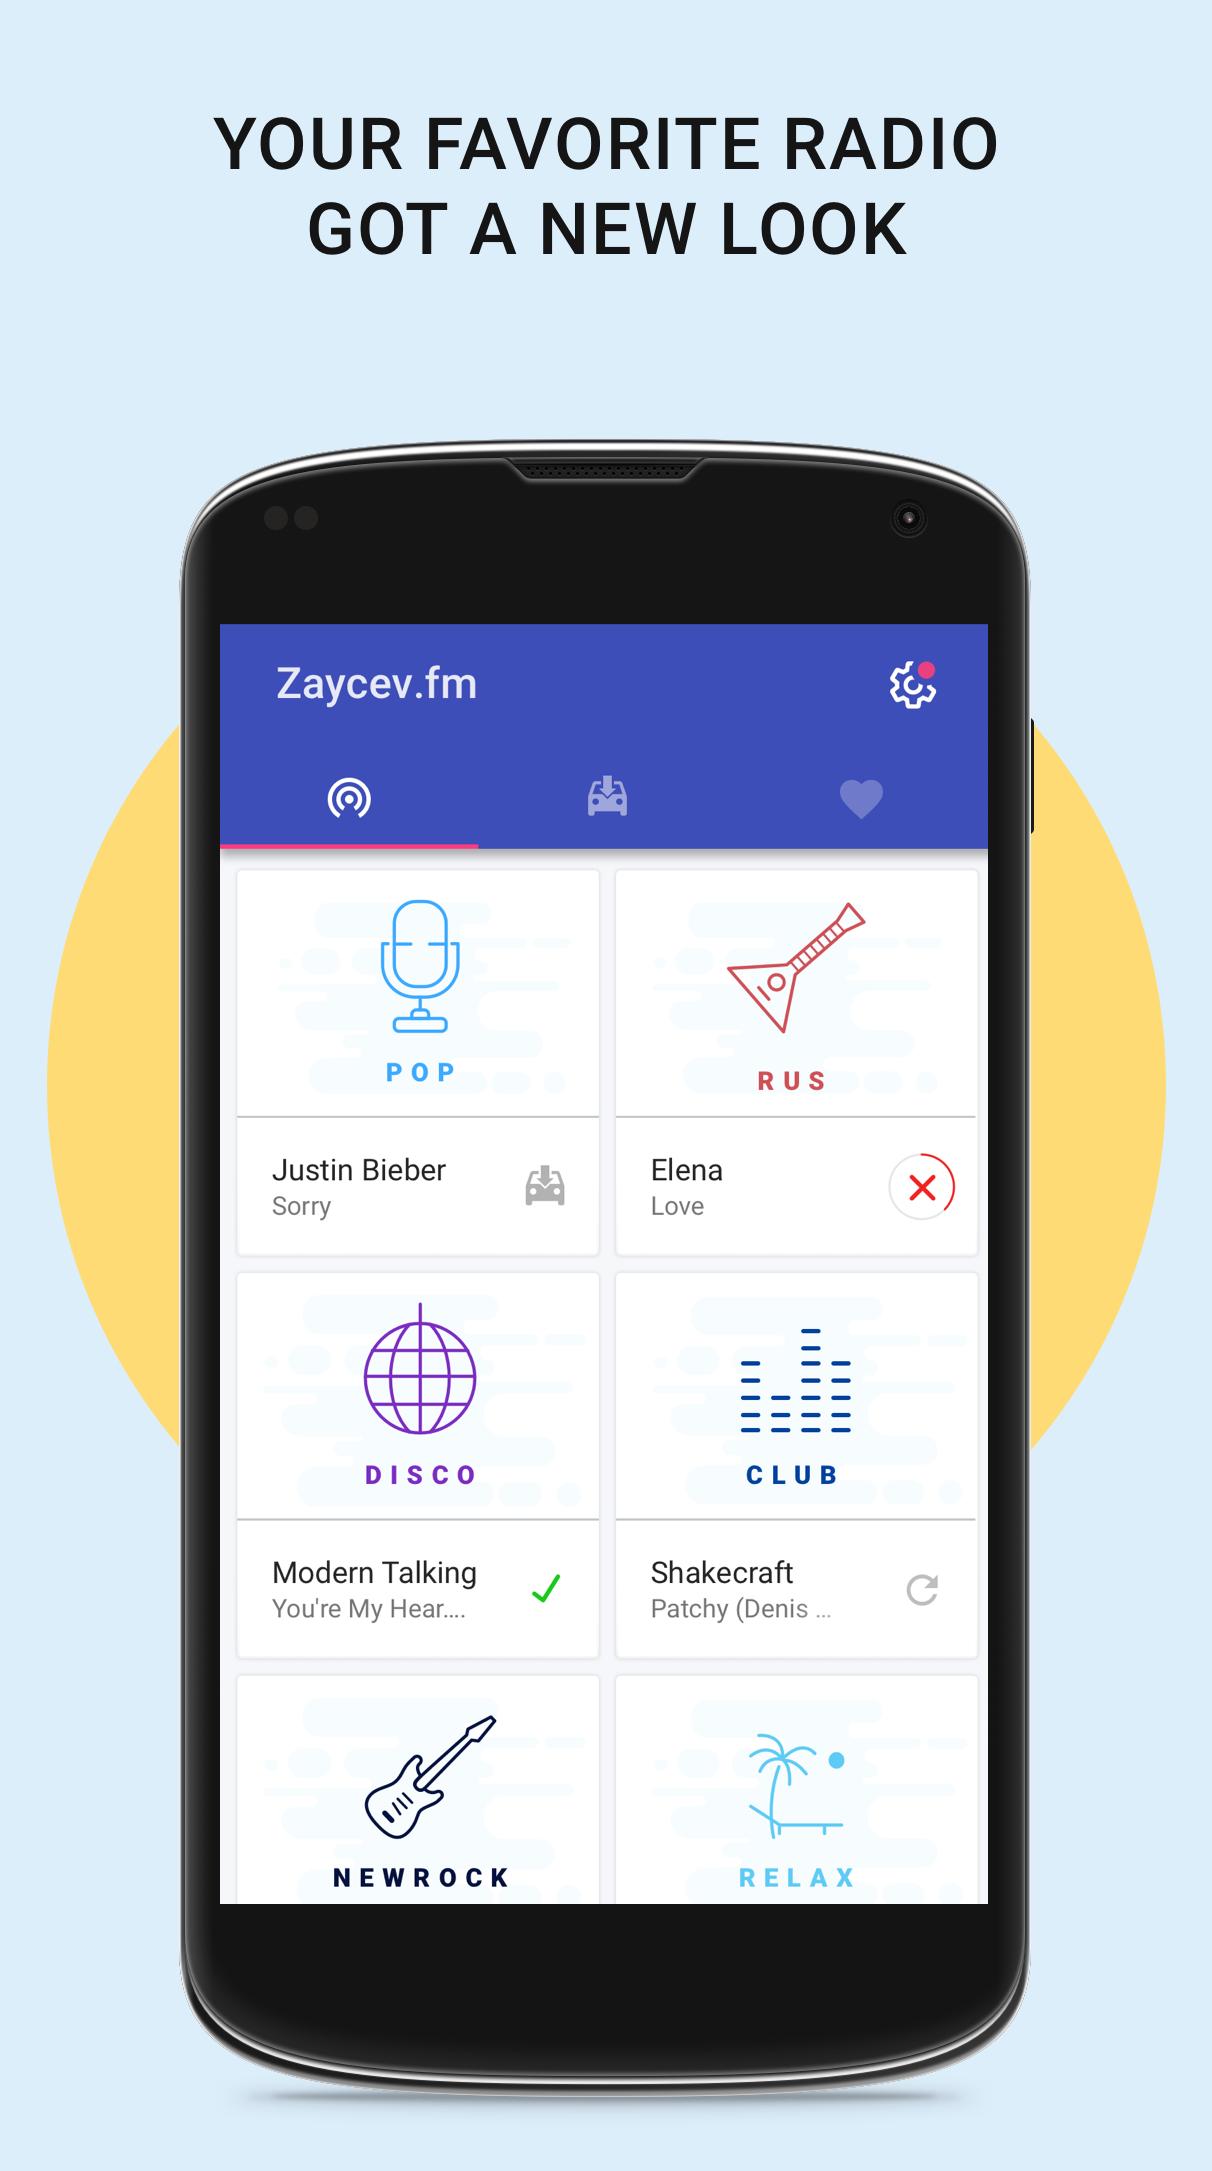 Radio Offline App